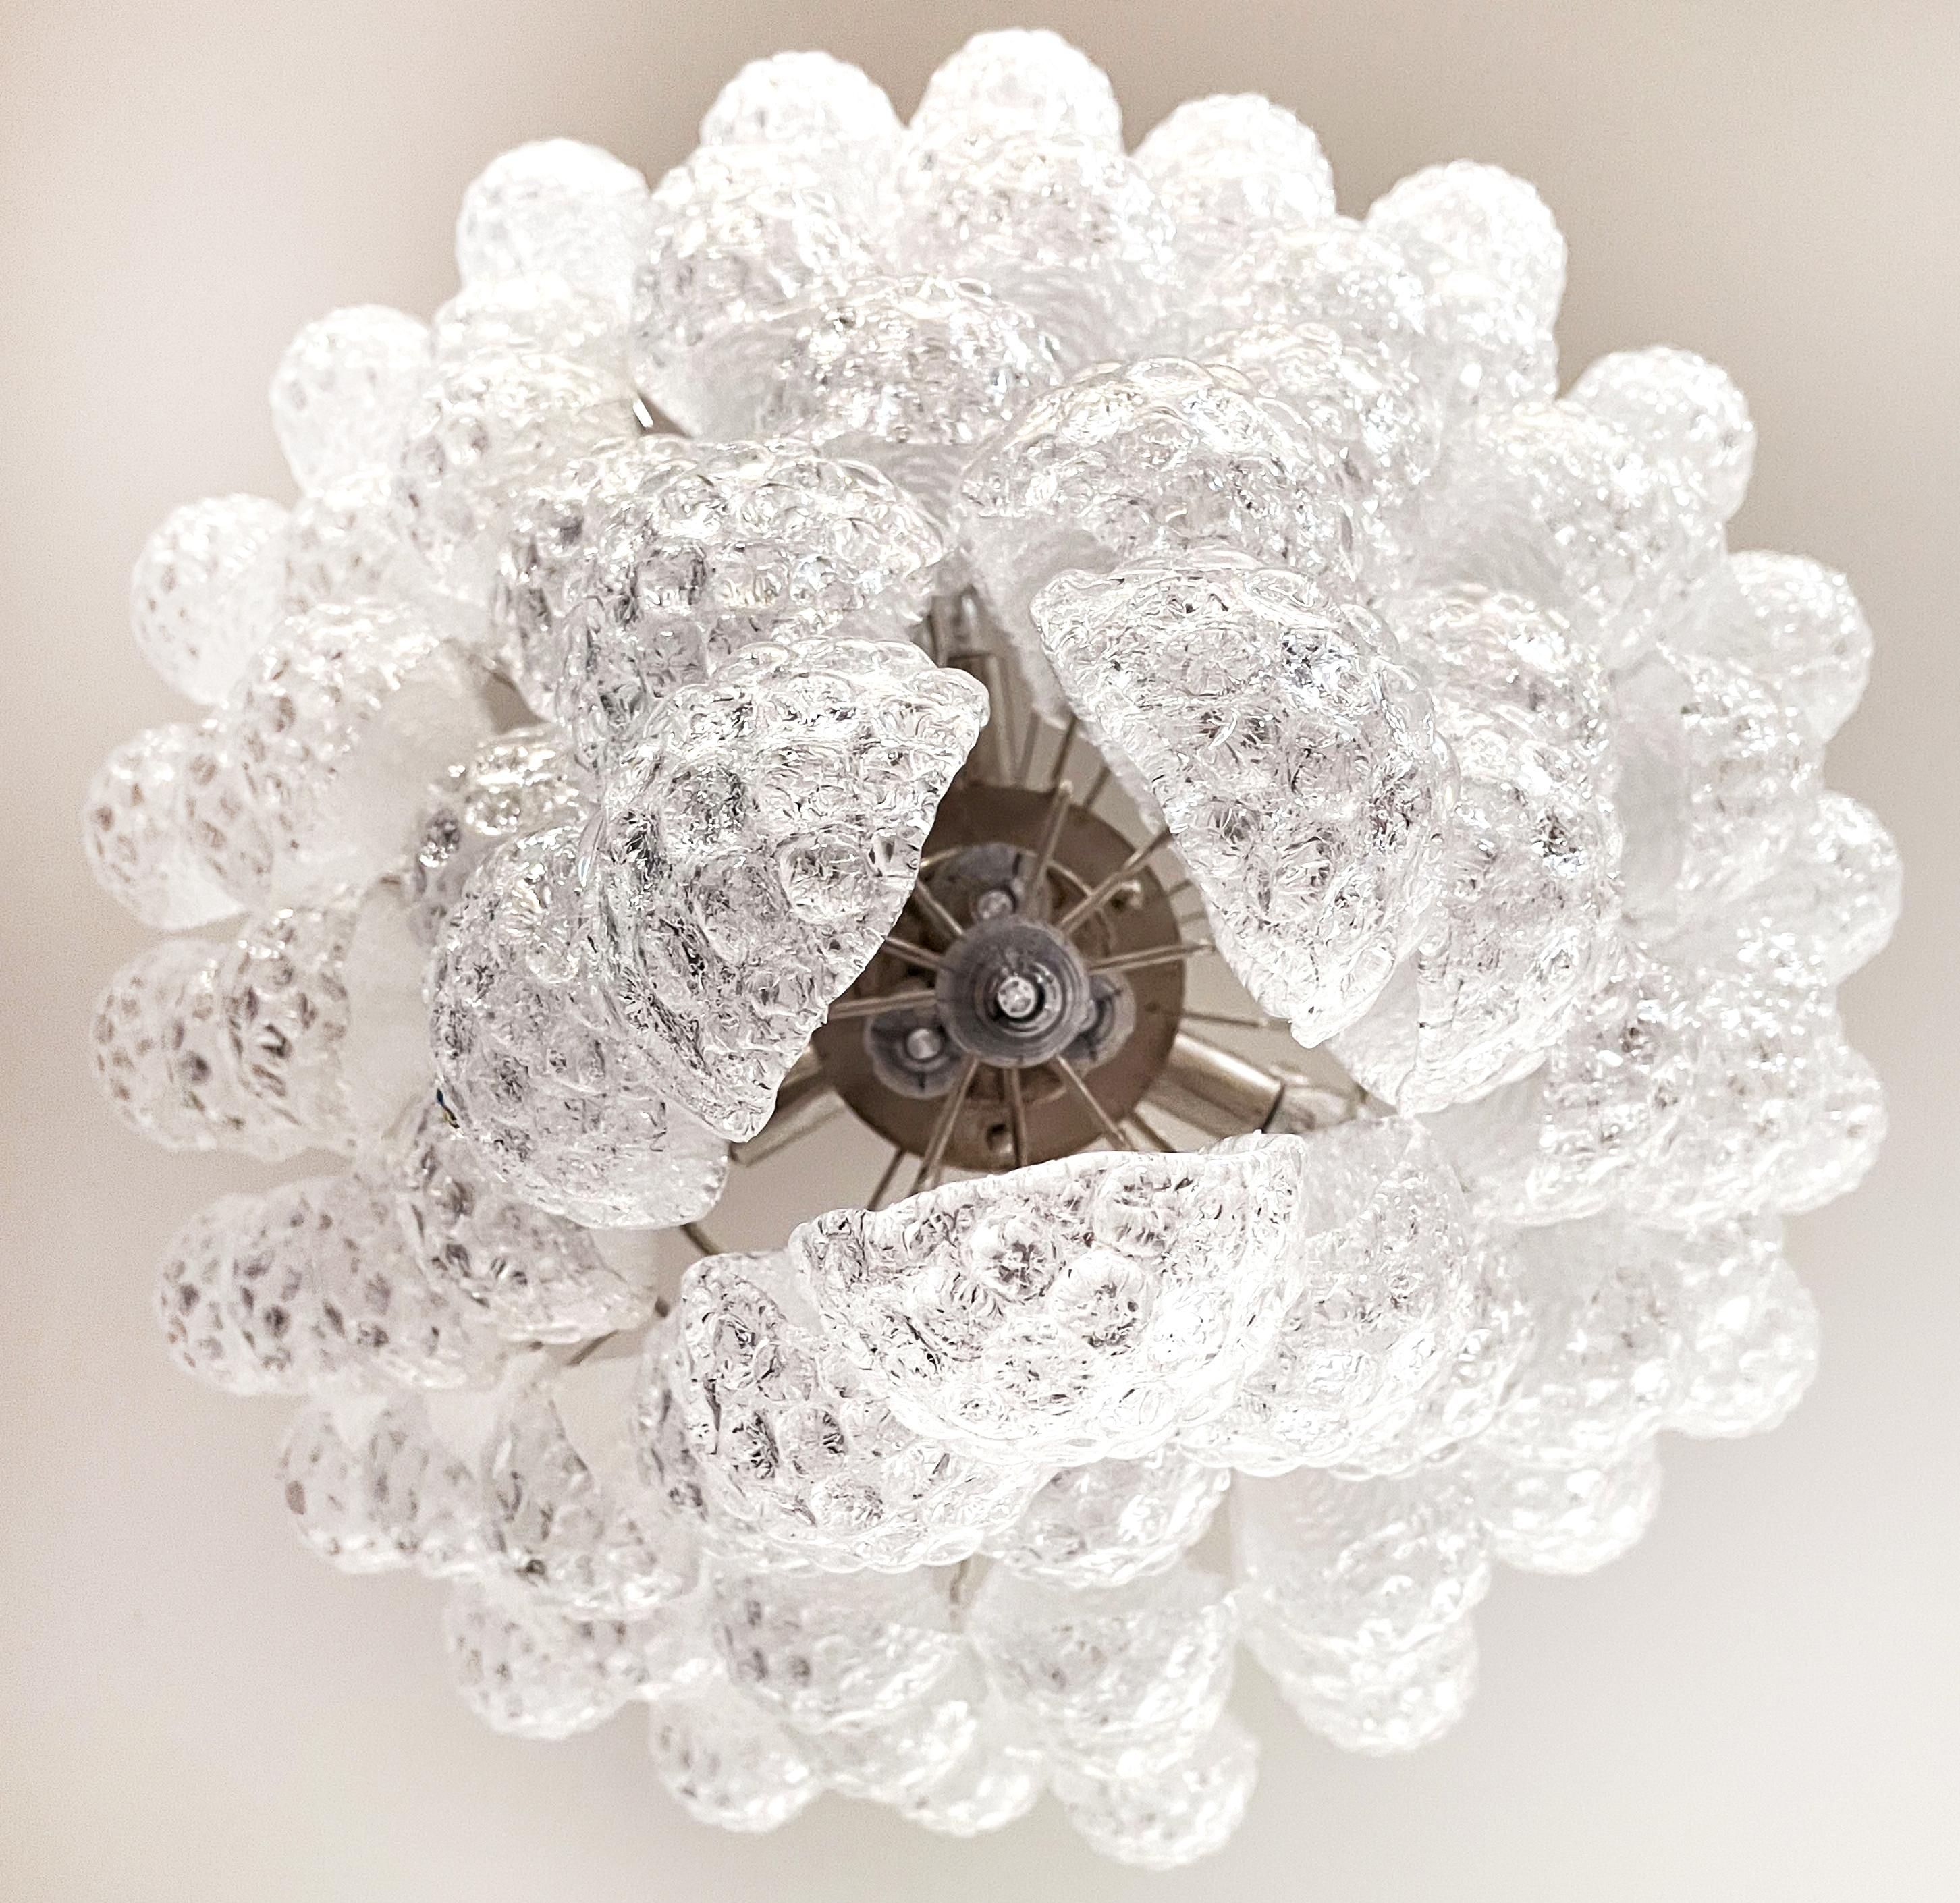 Magnificent Italian vintage Murano glass chandeliers - 75 glass petals drop For Sale 5